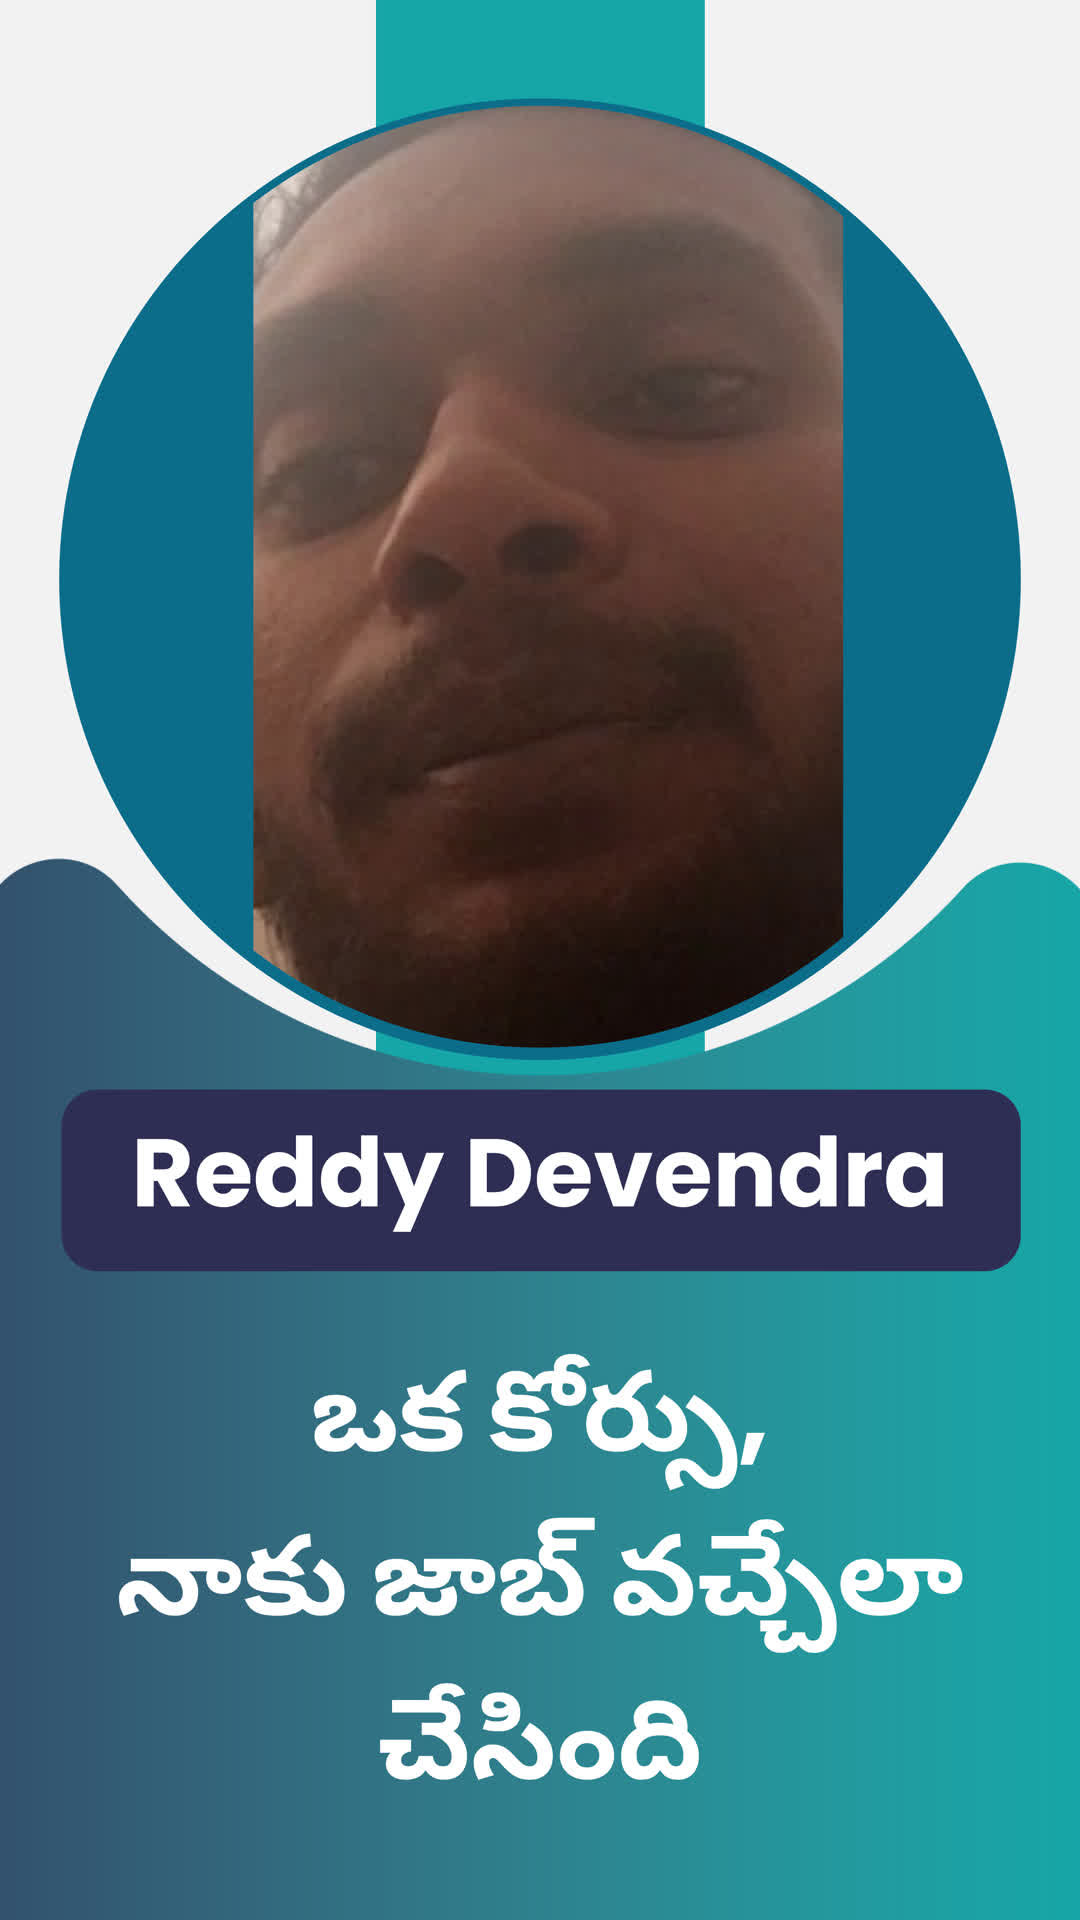 Reddy Devendra's Honest Review of ffreedom app - Chittoor ,Telangana